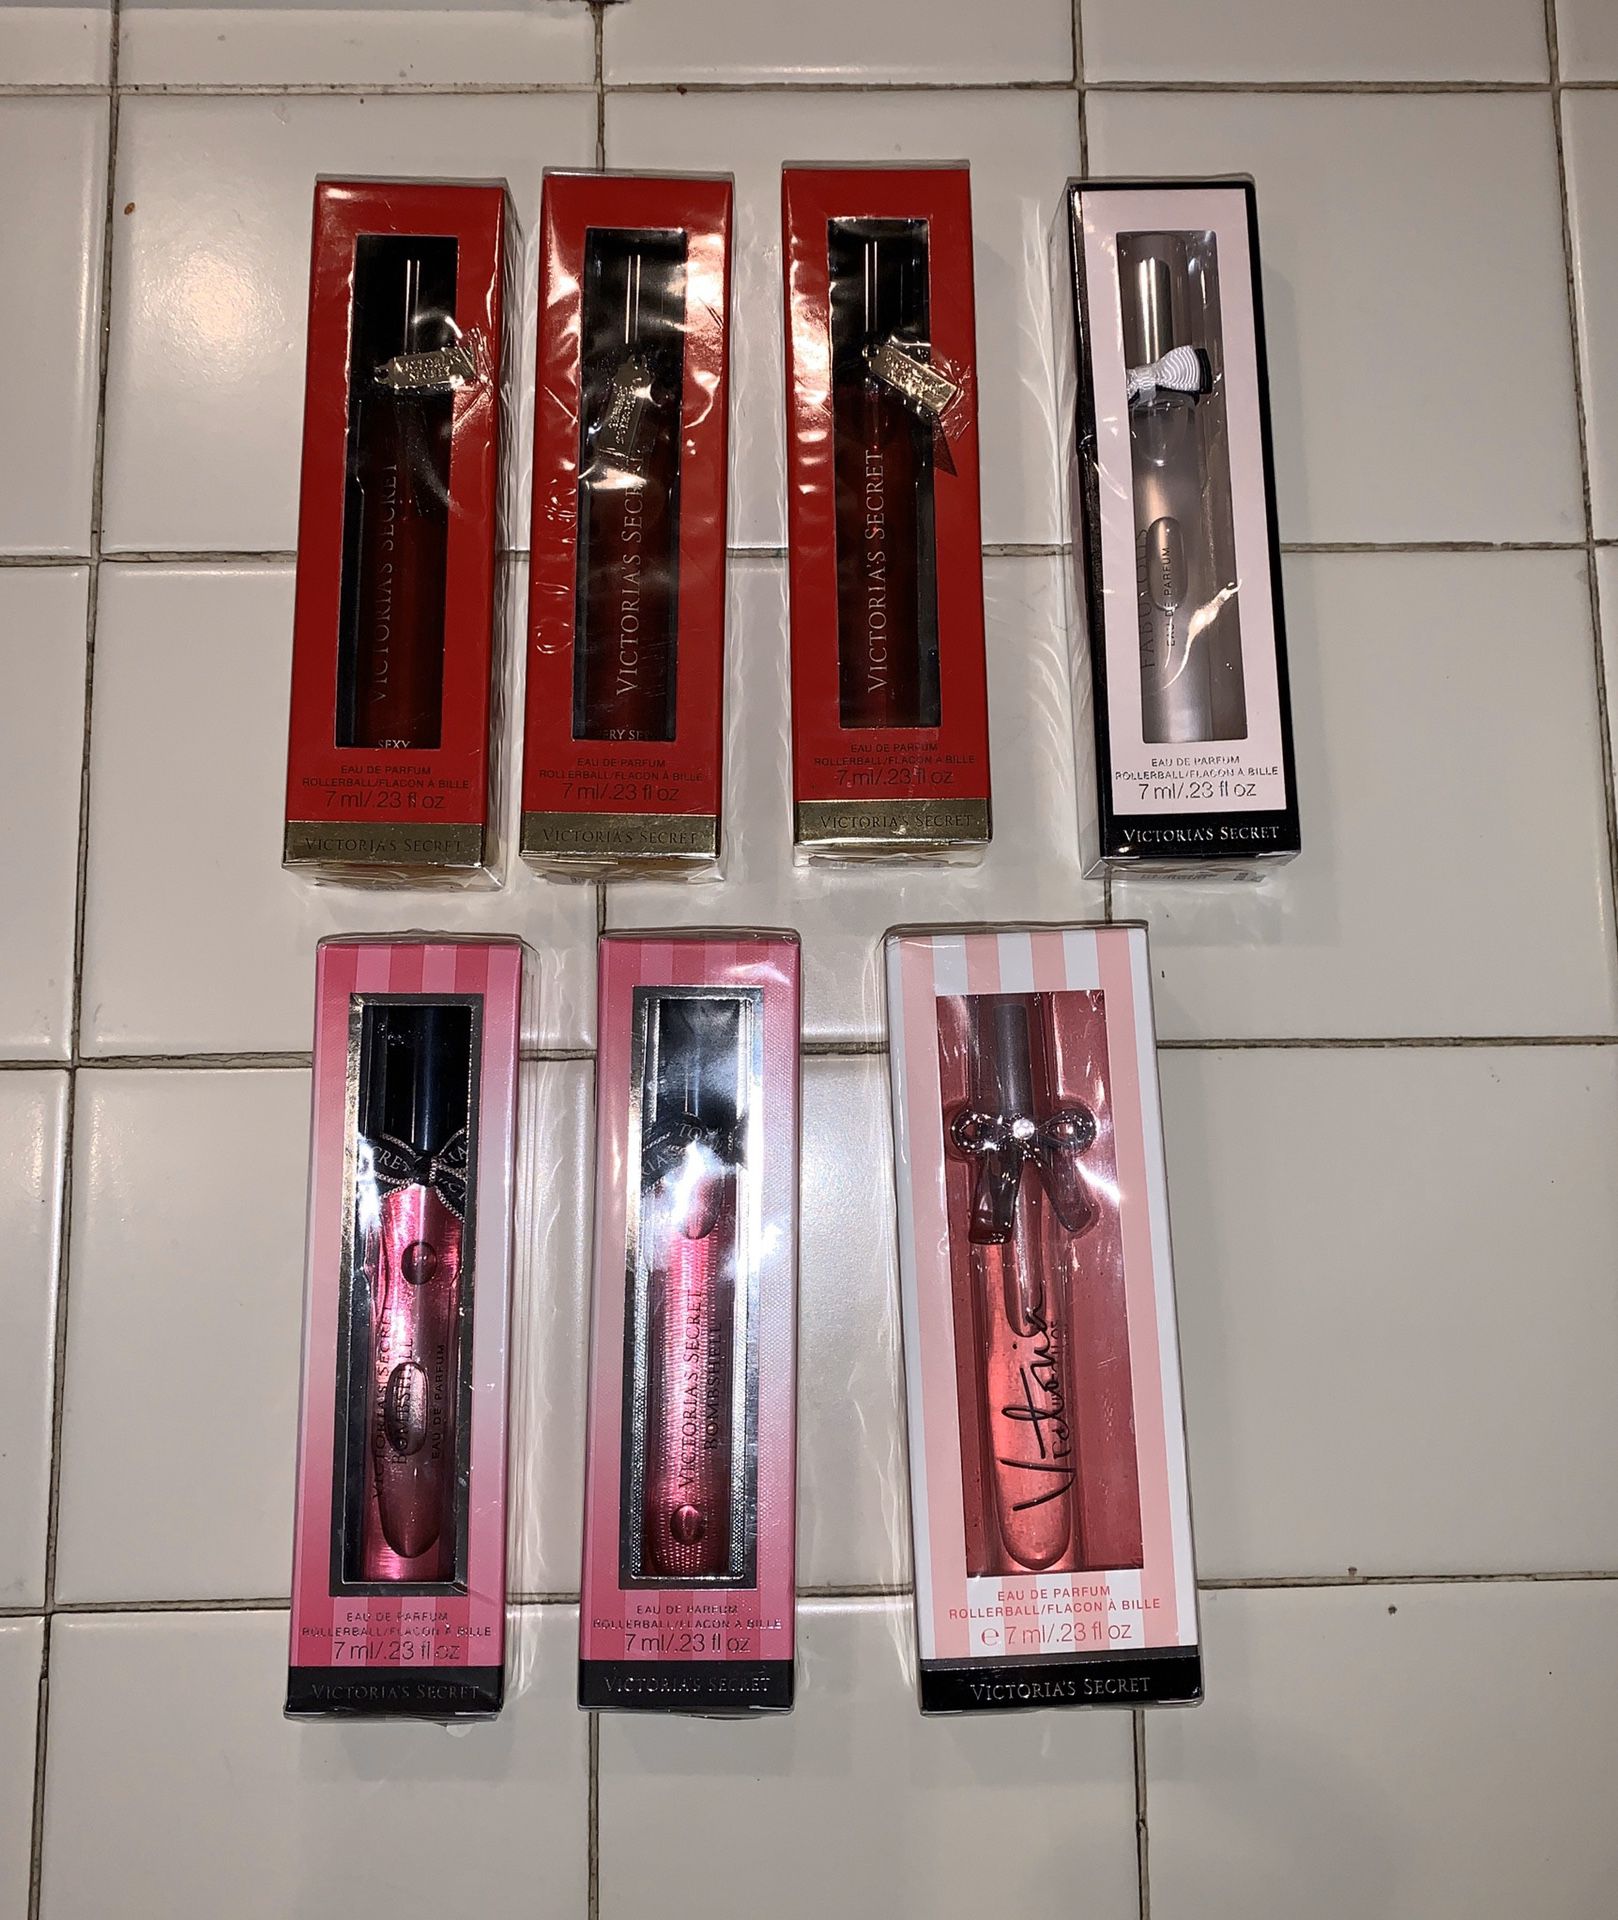 4 brand new Victoria’s Secret rollerball perfumes